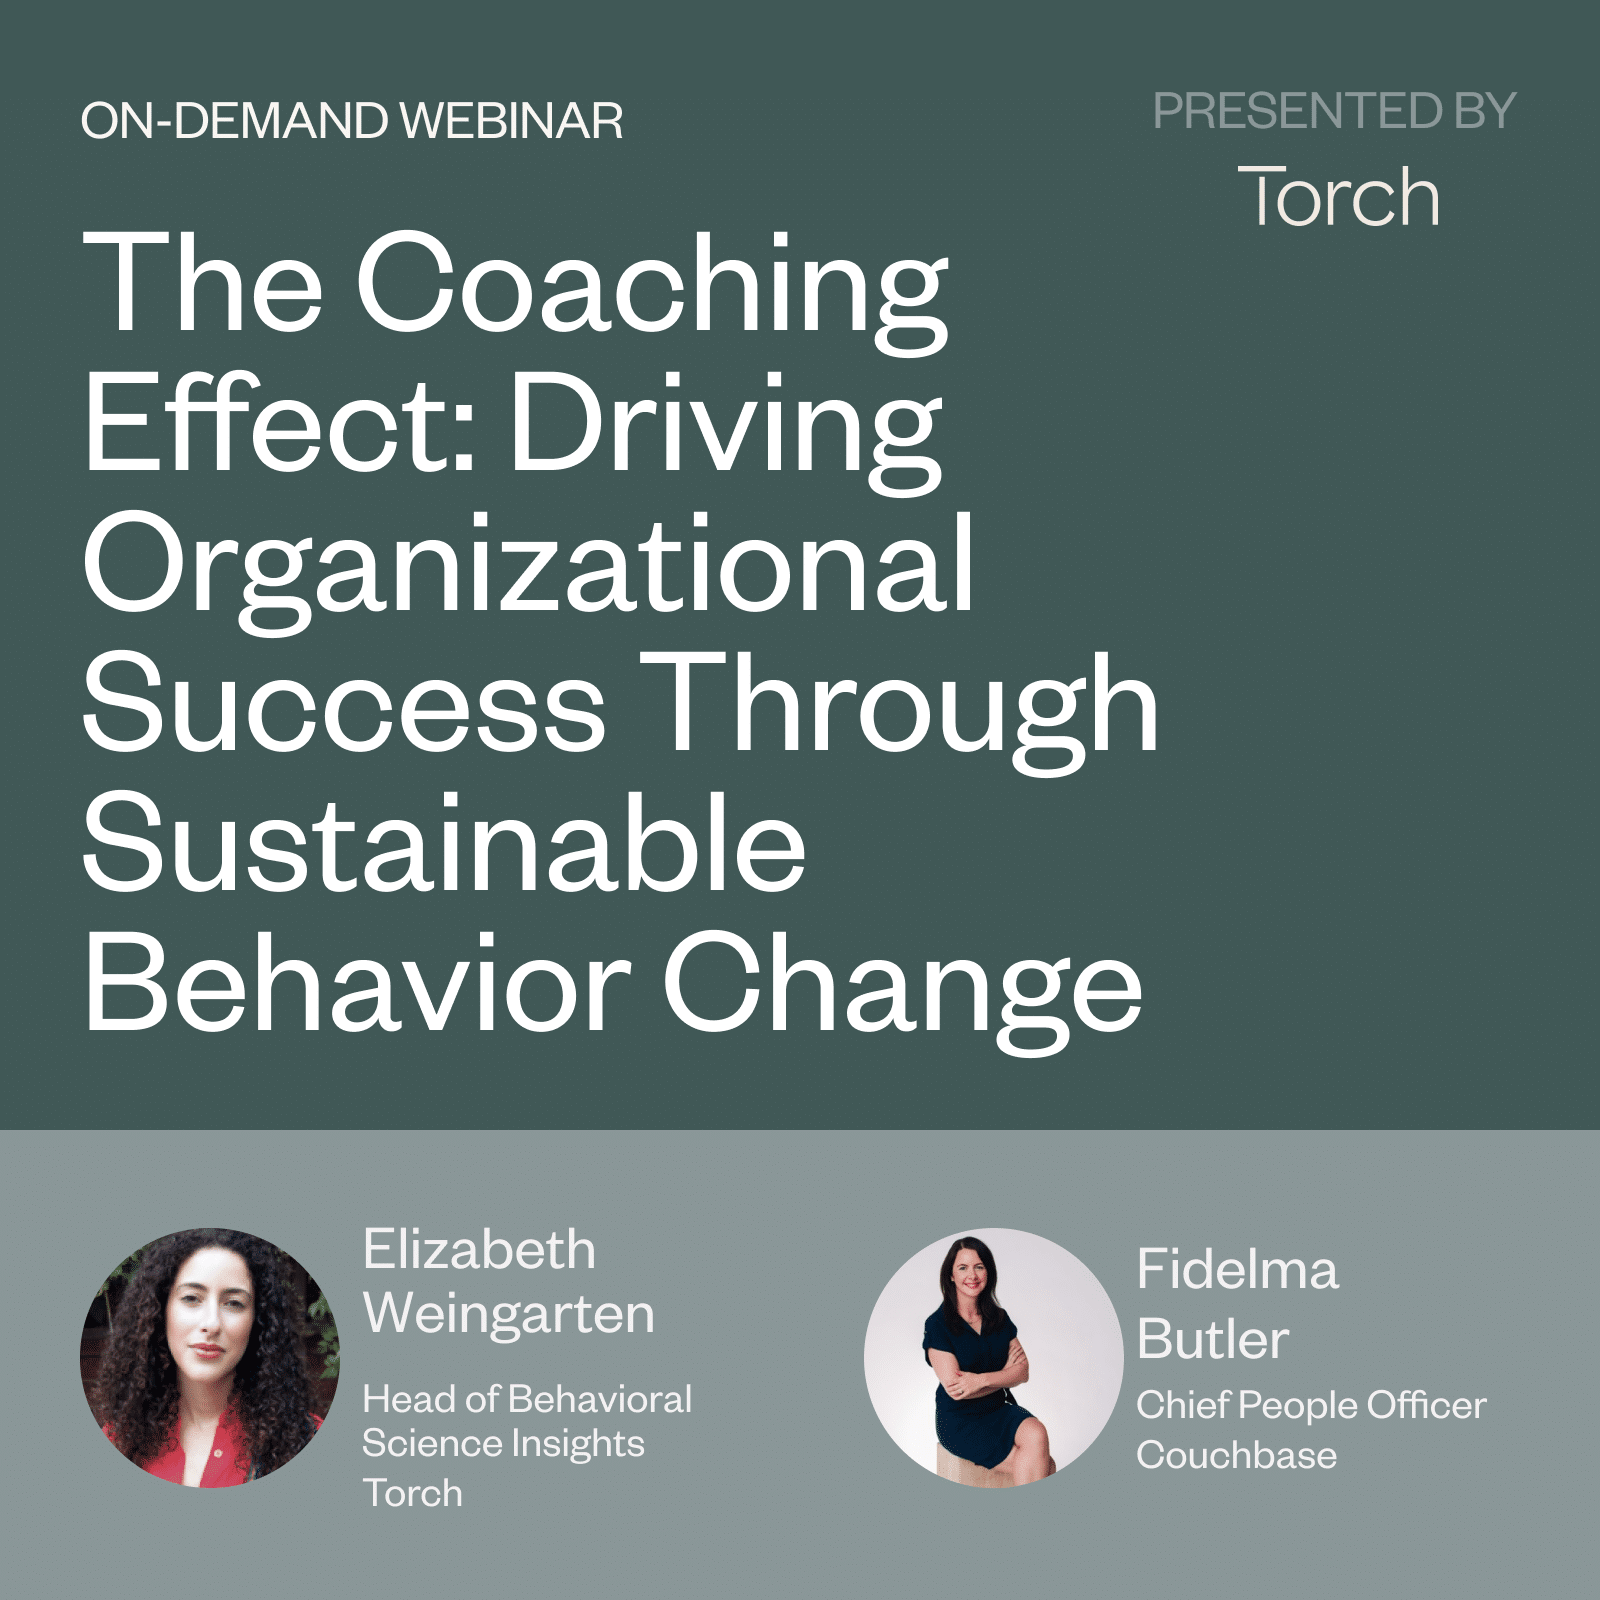 The Coaching Effect: Driving Organizational Success Through Sustainable Behavior Change